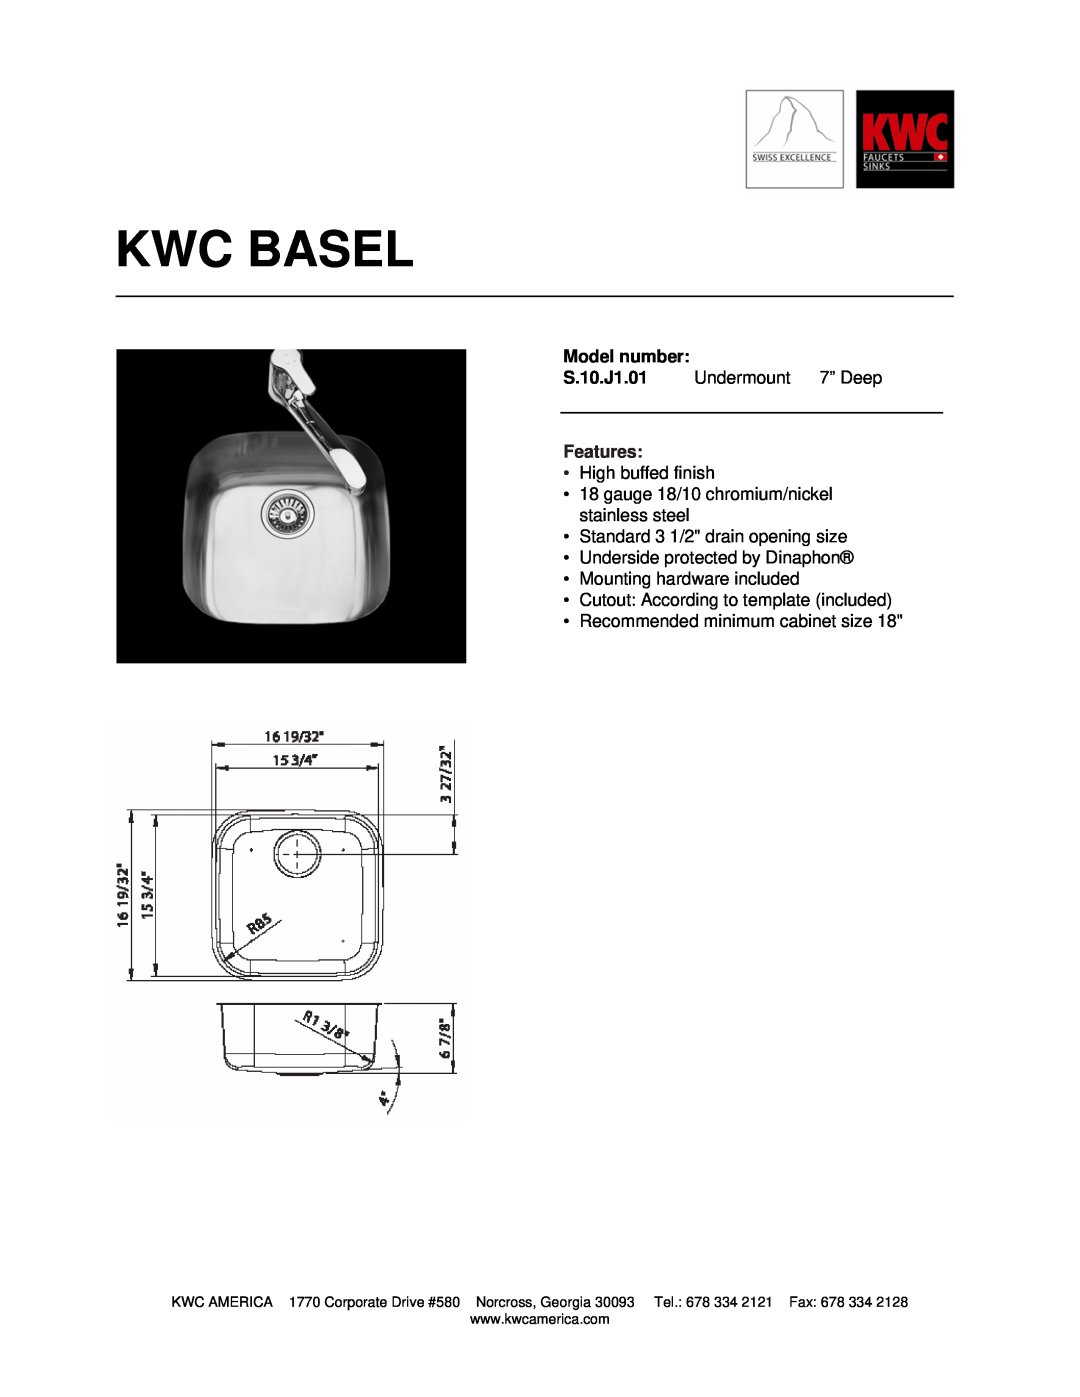 KWC S.10.J1.01 manual Kwc Basel, Model number, Undermount 7” Deep, Features, High buffed finish 